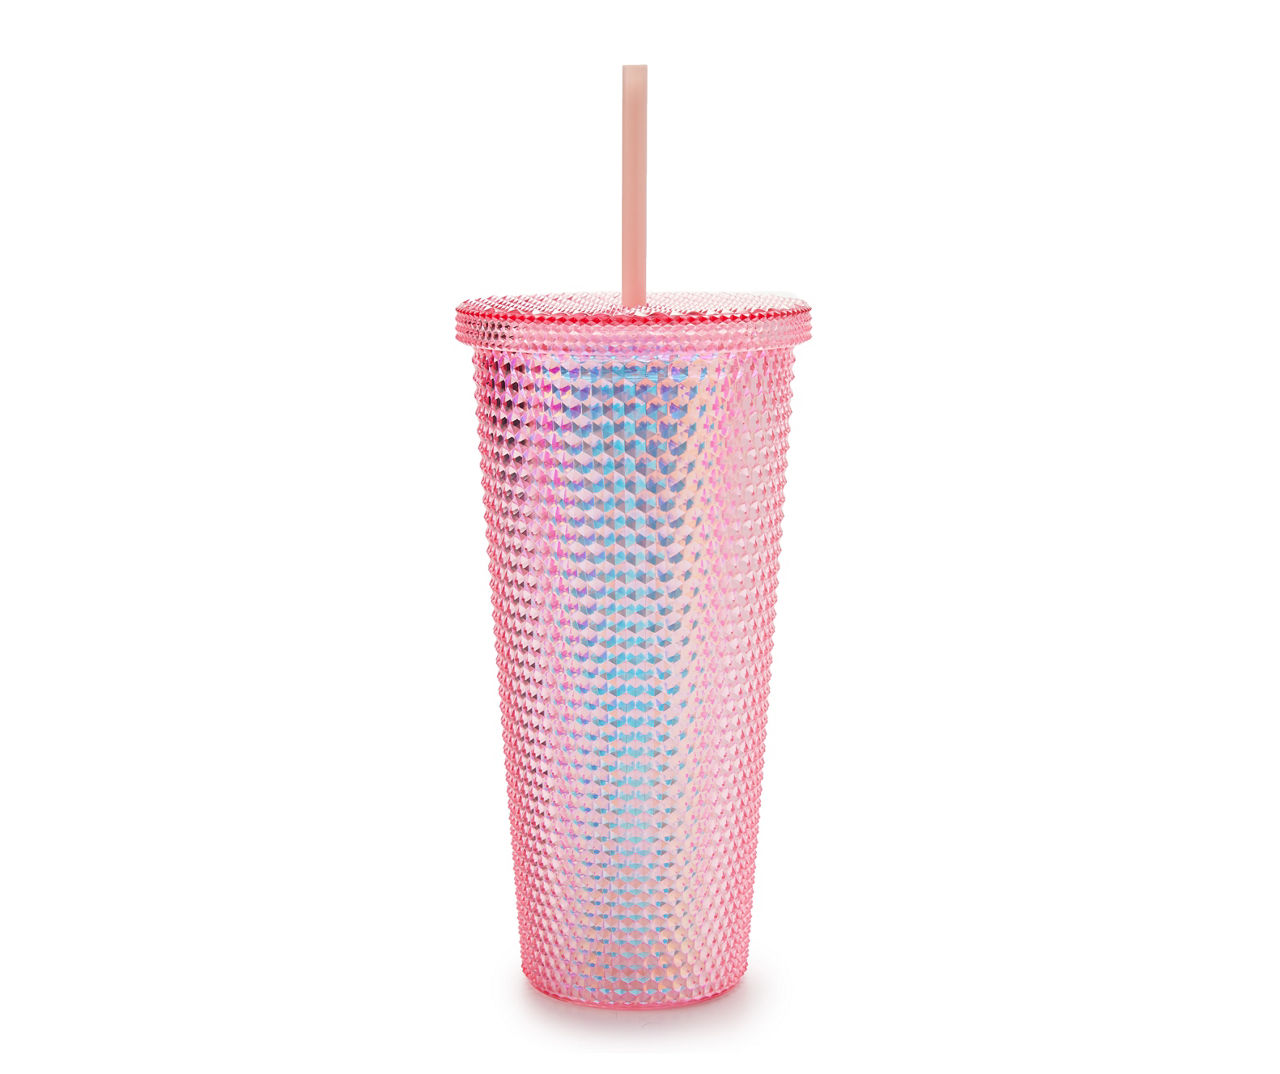 Blush Iridescent Cute Drink Tumbler - Travel Cup & Straw, 24oz 